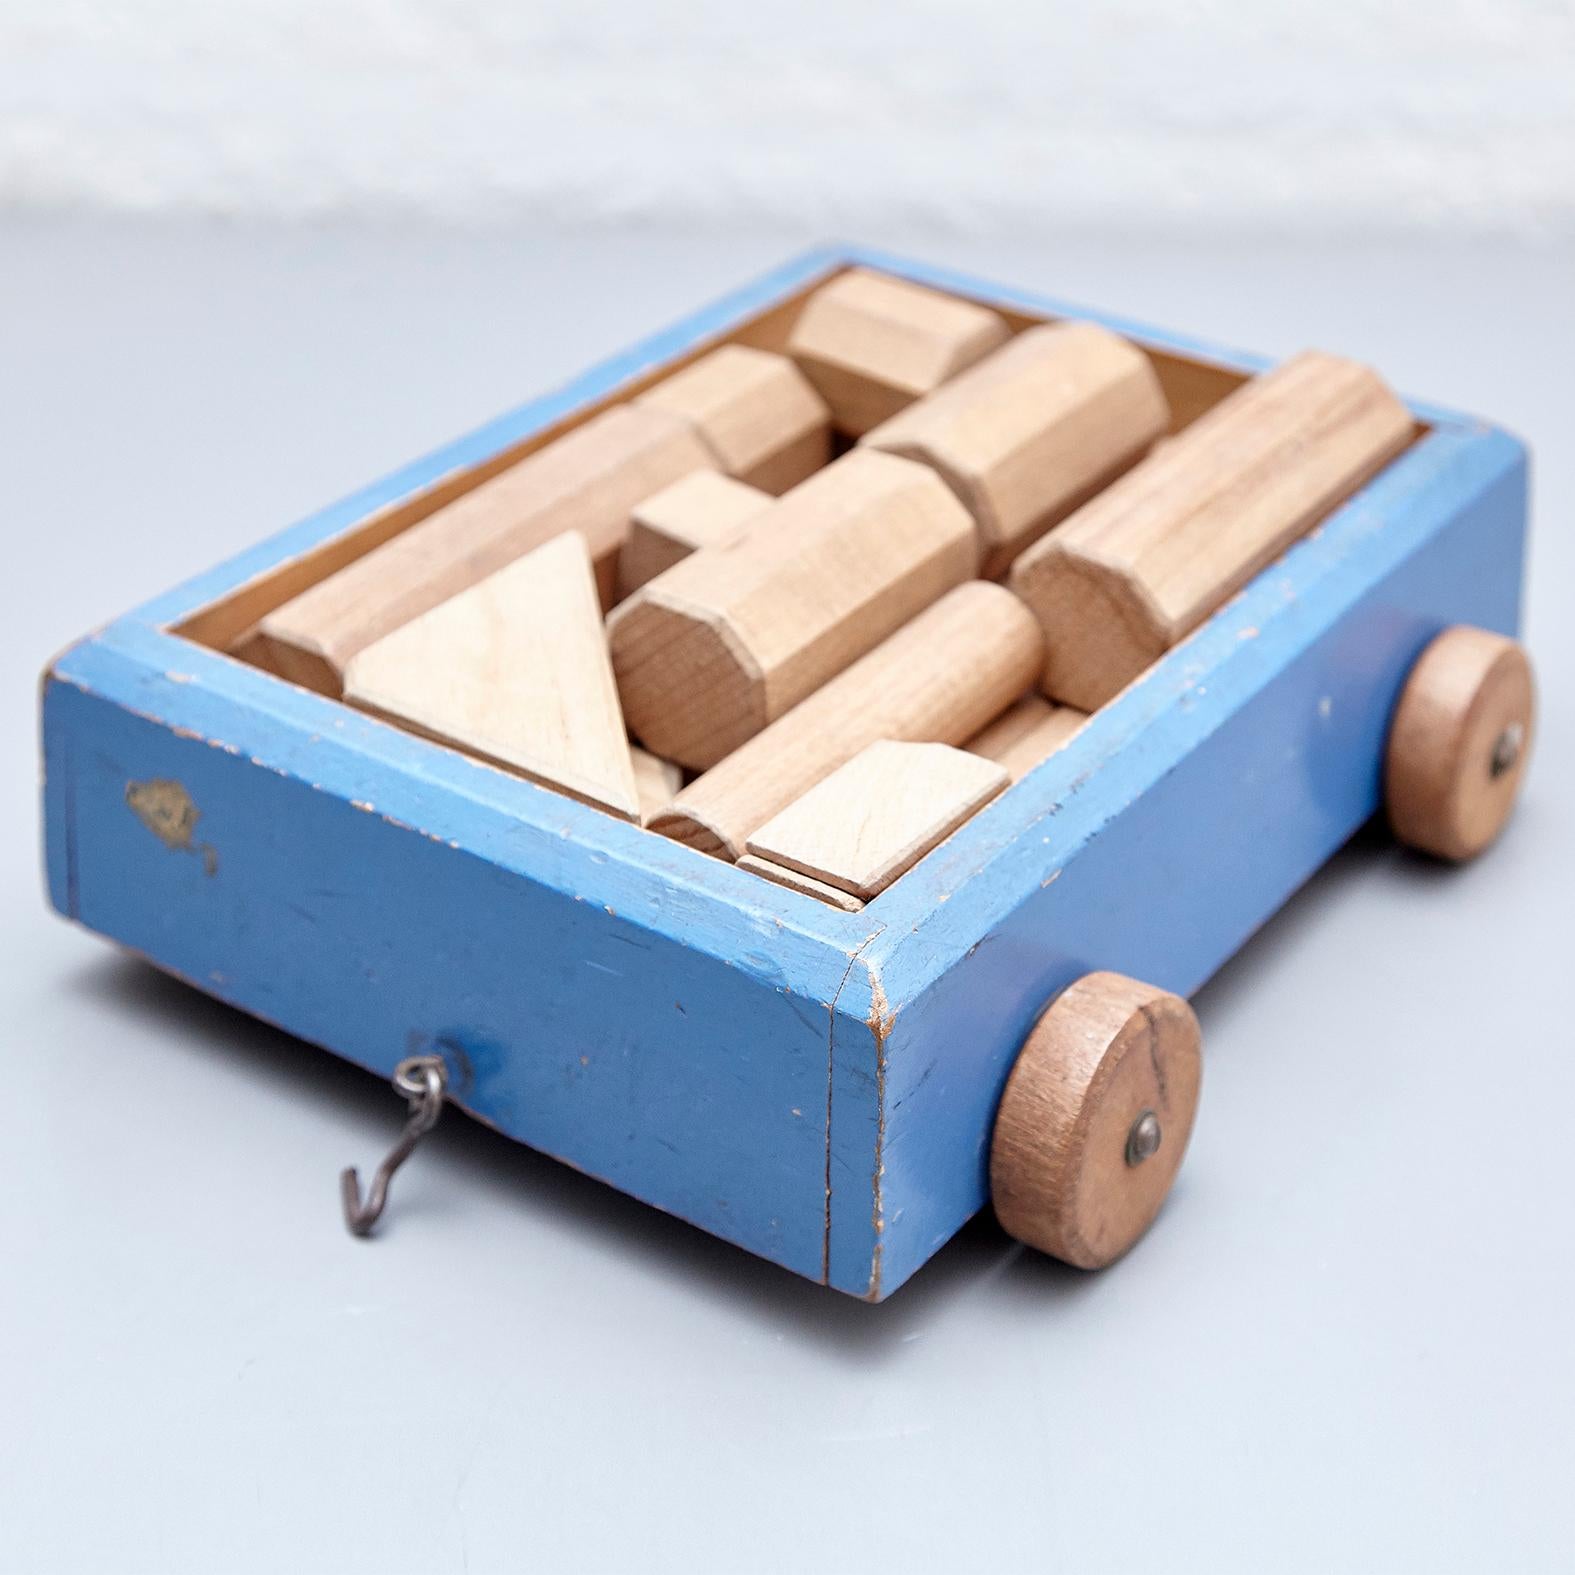 Dutch Ko Verzuu for Ado, Mid-Century Modern, Wood Car Construction Netherlands Toy